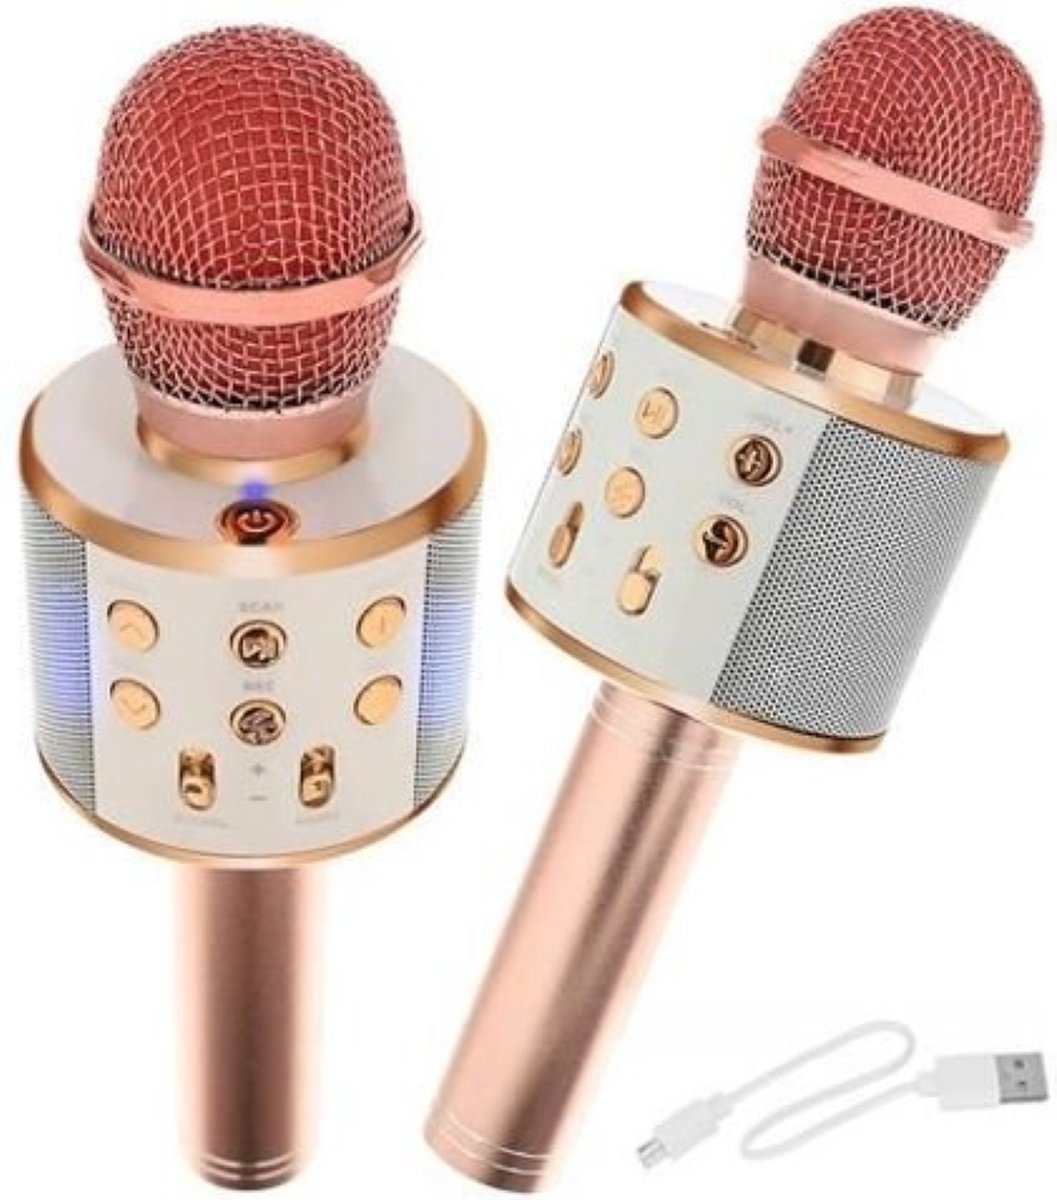 Oneiro's Luxe Karaoke microphone with light pink speaker